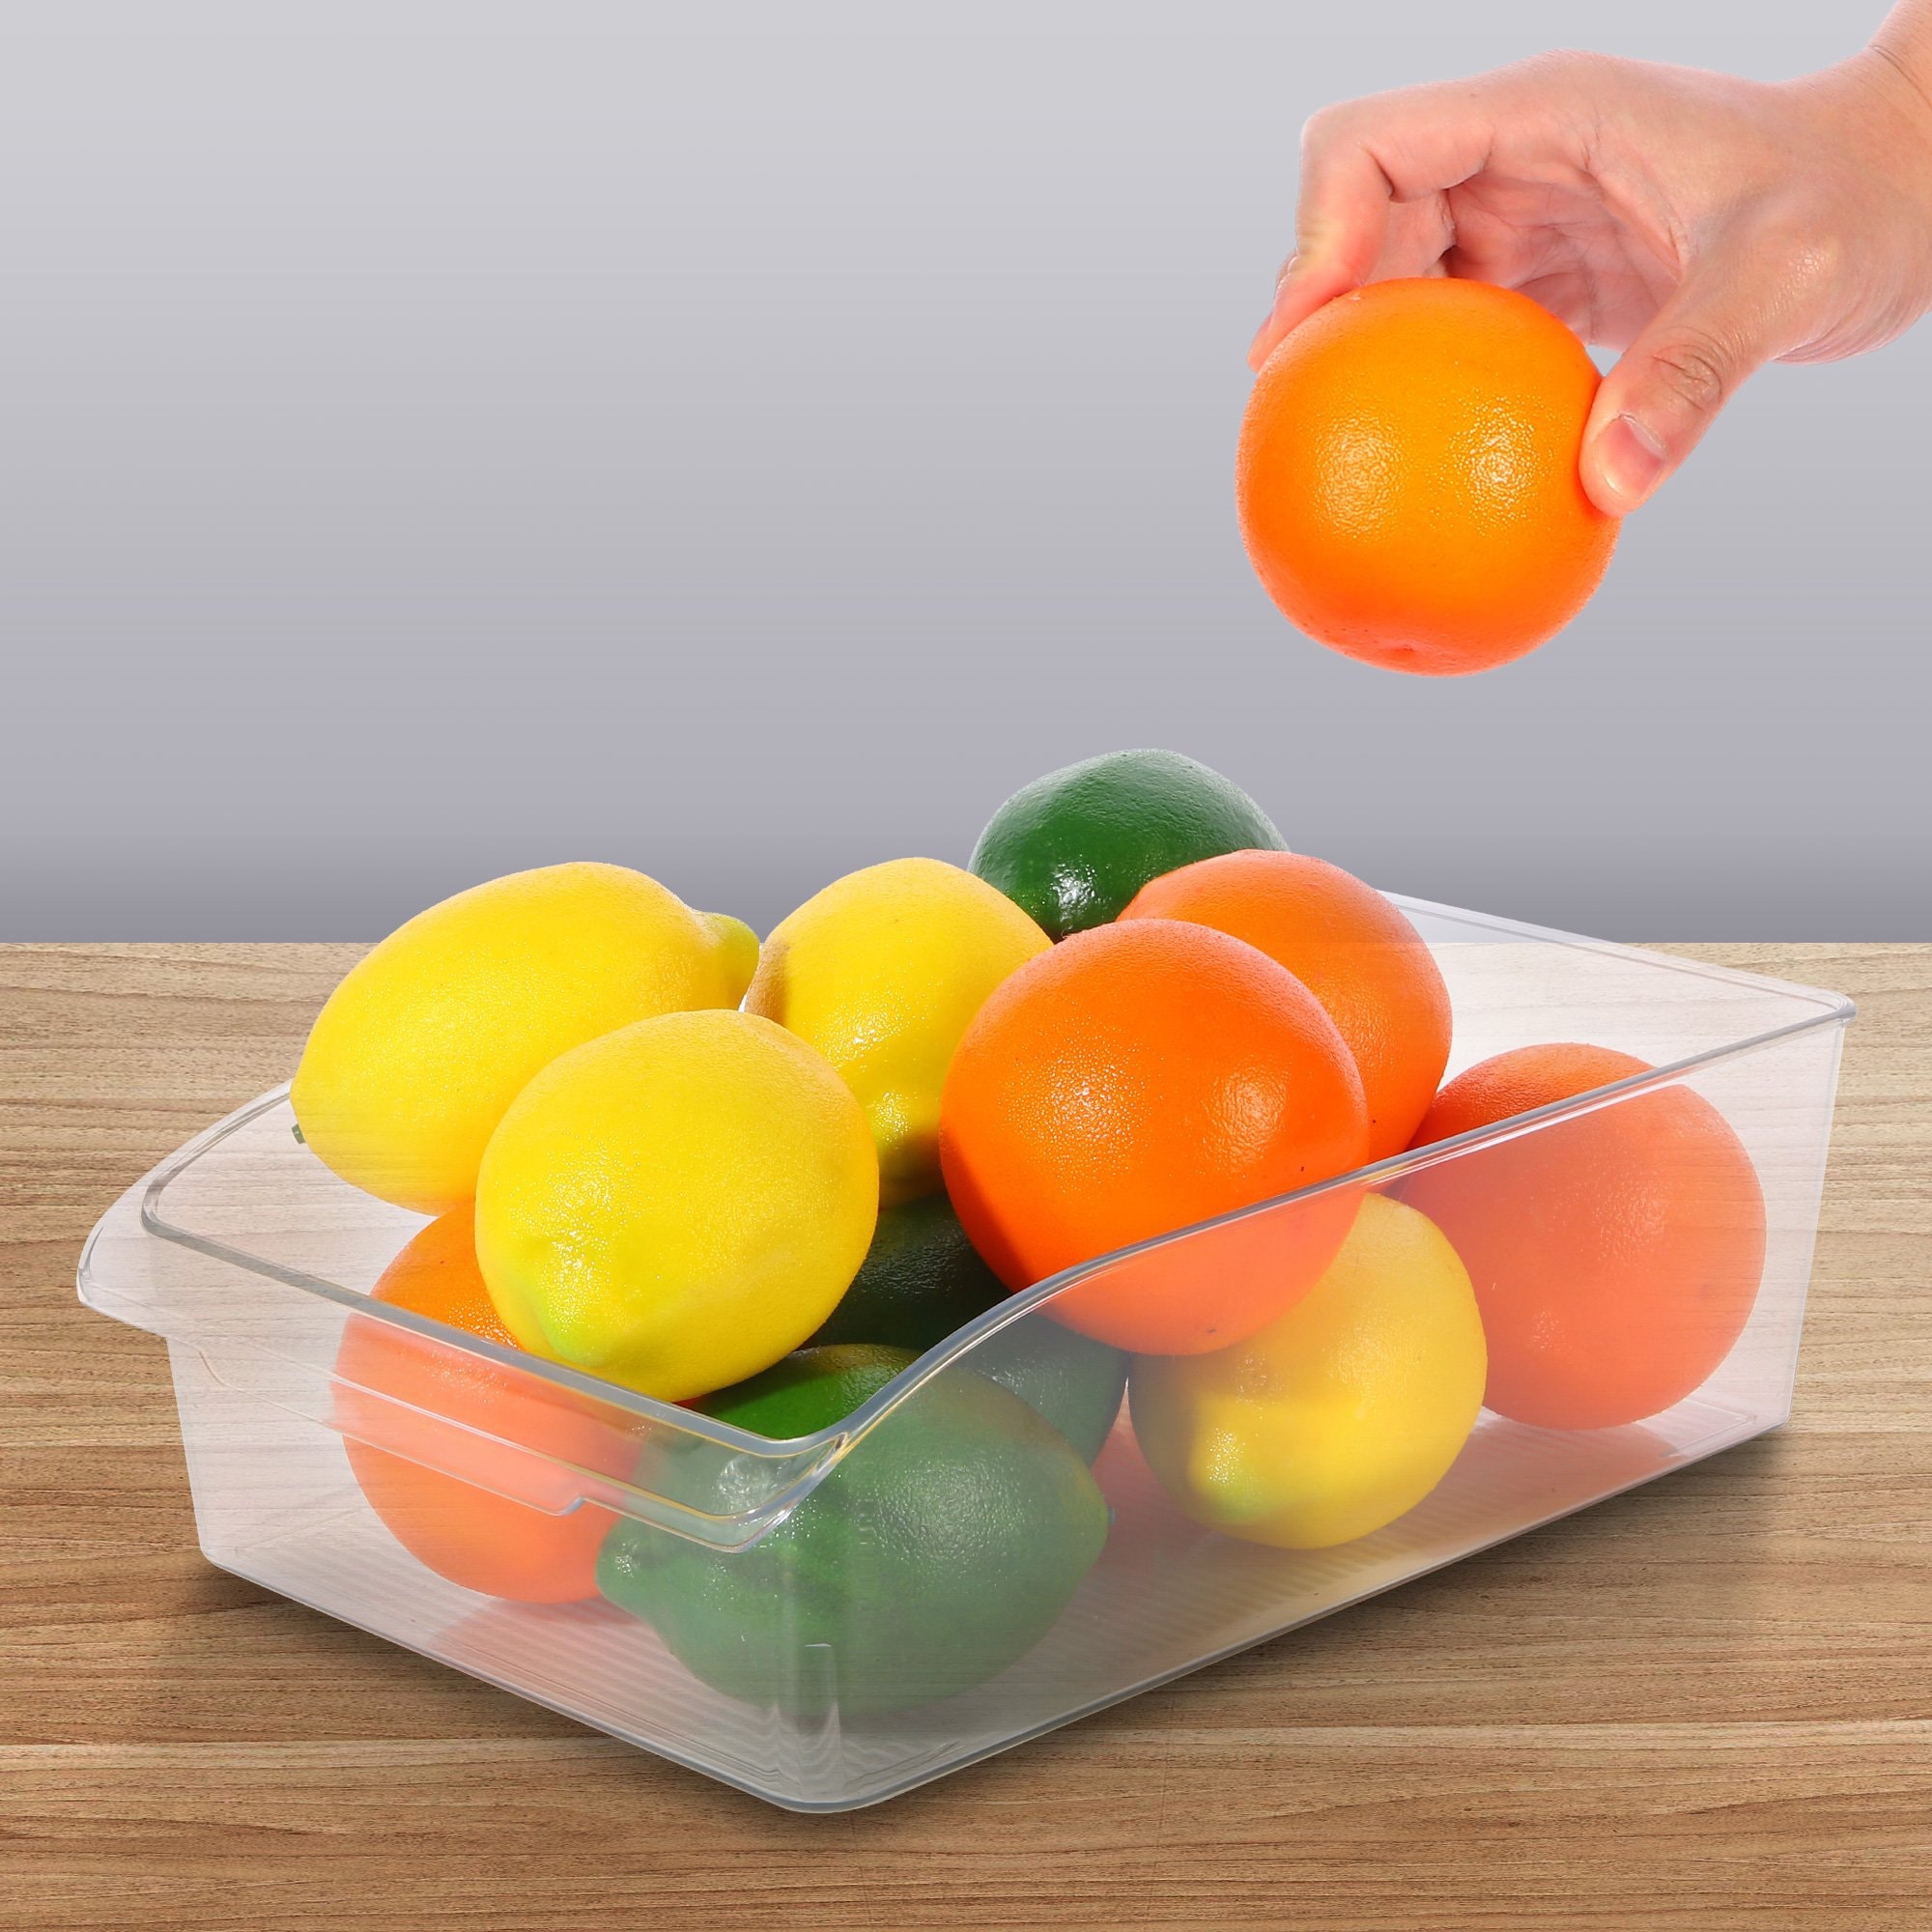 ROSELIFE 飲品蔬果分類廚房冰箱收納盒 12.2"x8.0"x3.6" 2裝